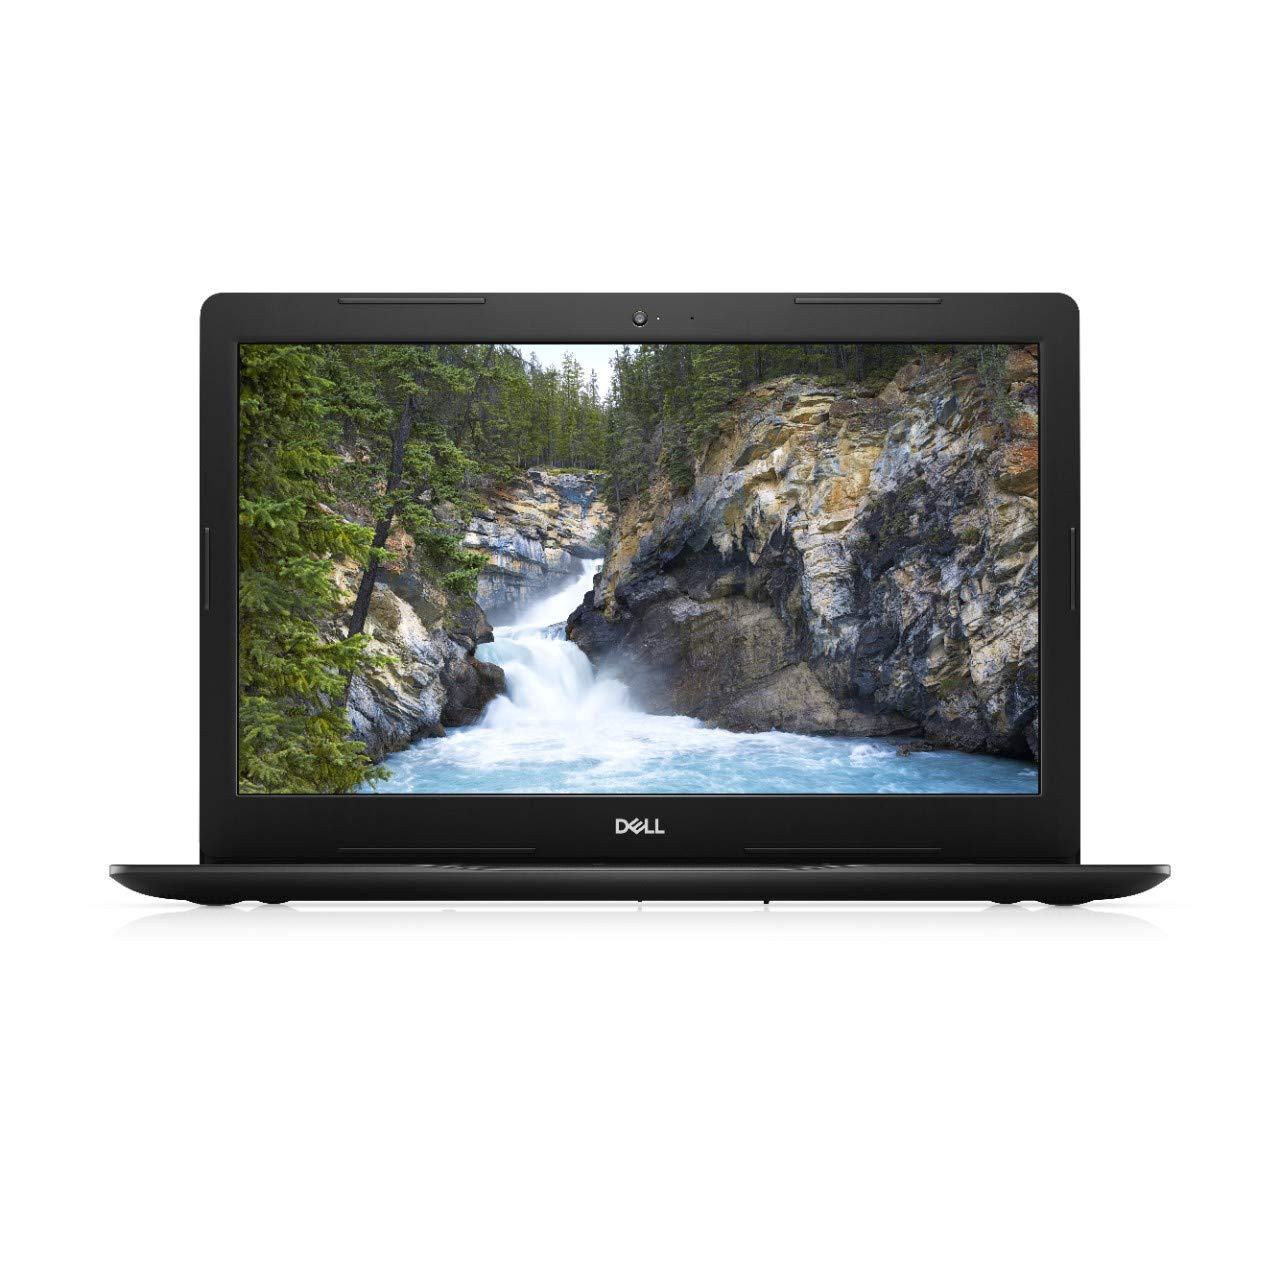 Dell Vostro 3590 15.6-inch FHD Laptop (10th Gen Core i3-10110U/4GB/1TB HDD)Black